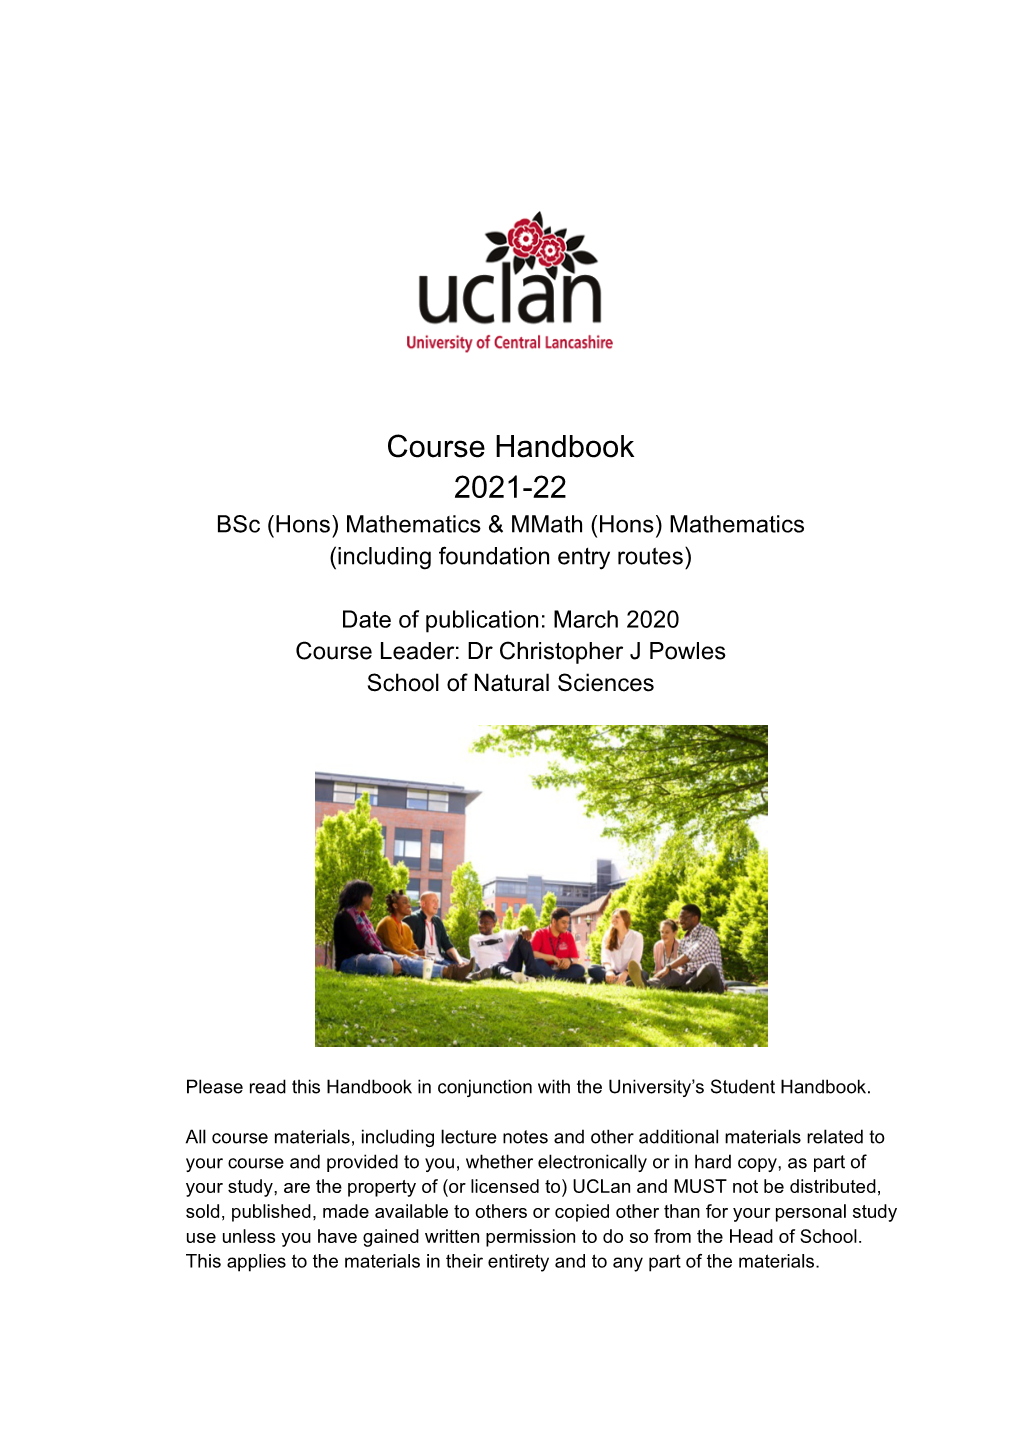 Course Handbook 2021-22 Bsc (Hons) Mathematics & Mmath (Hons) Mathematics (Including Foundation Entry Routes)